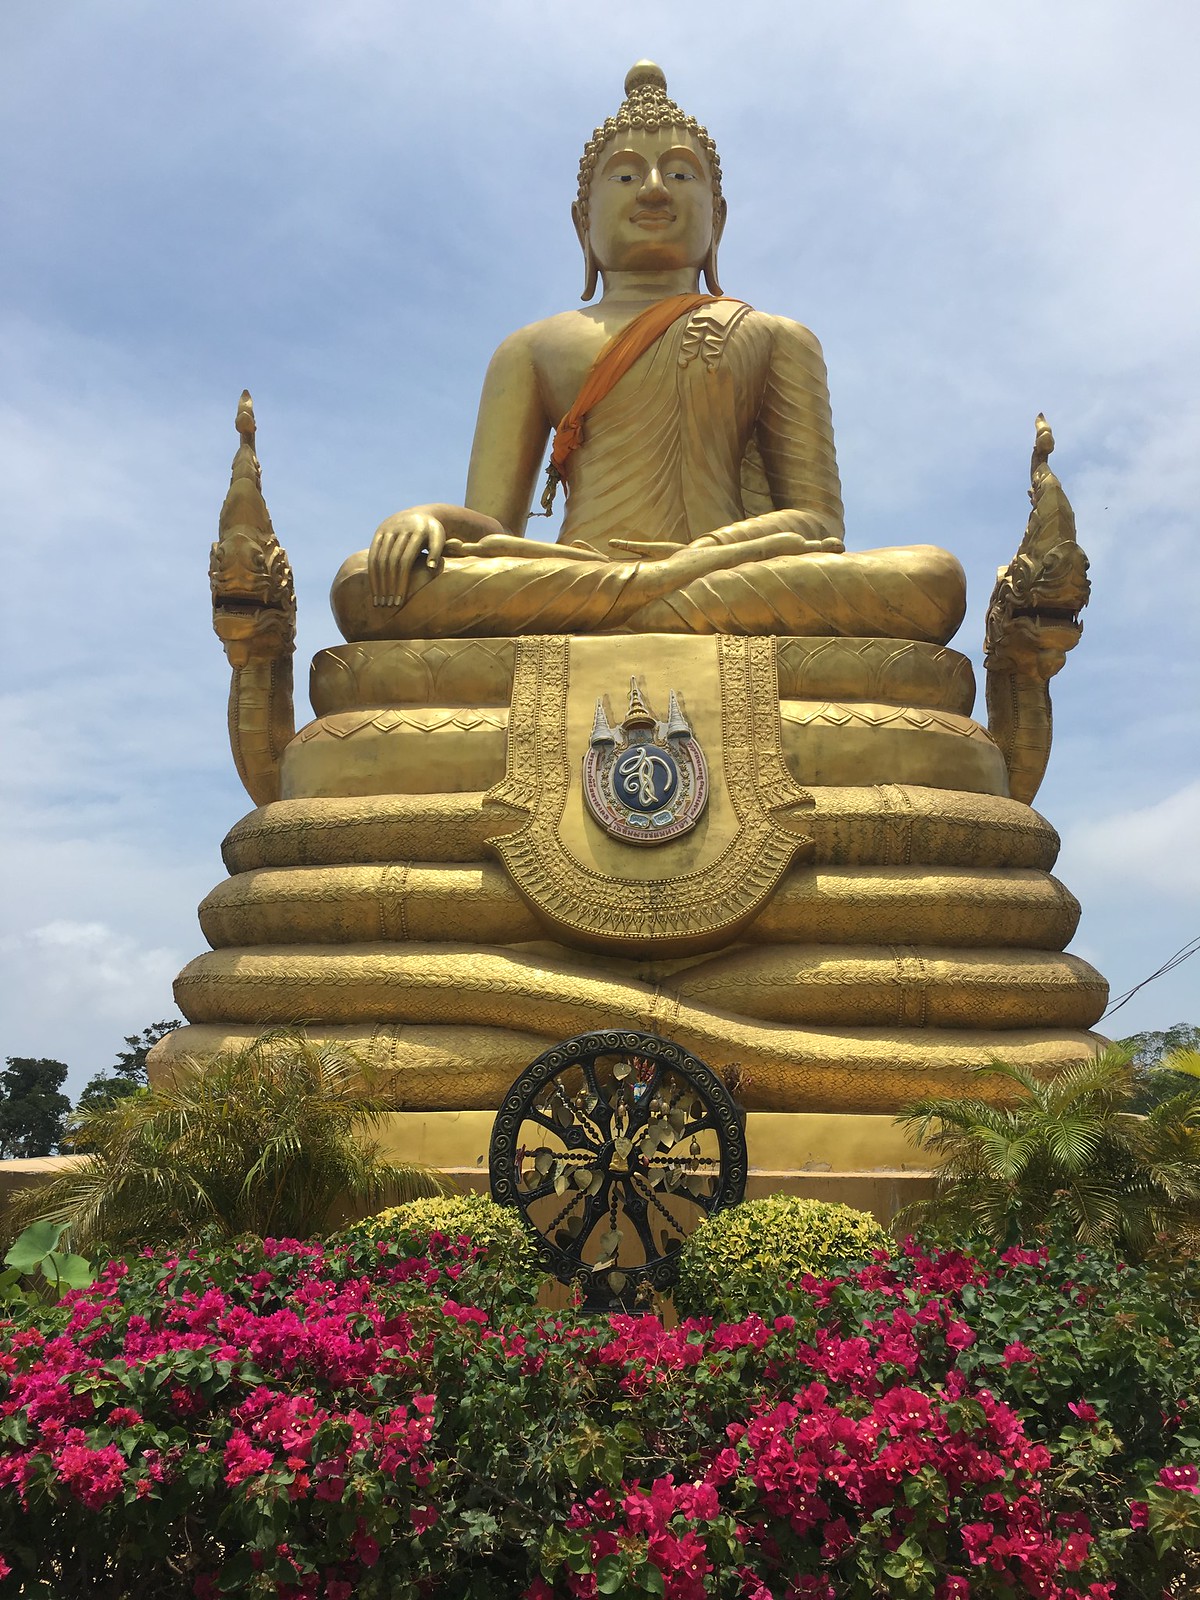 Things to do in Phuket